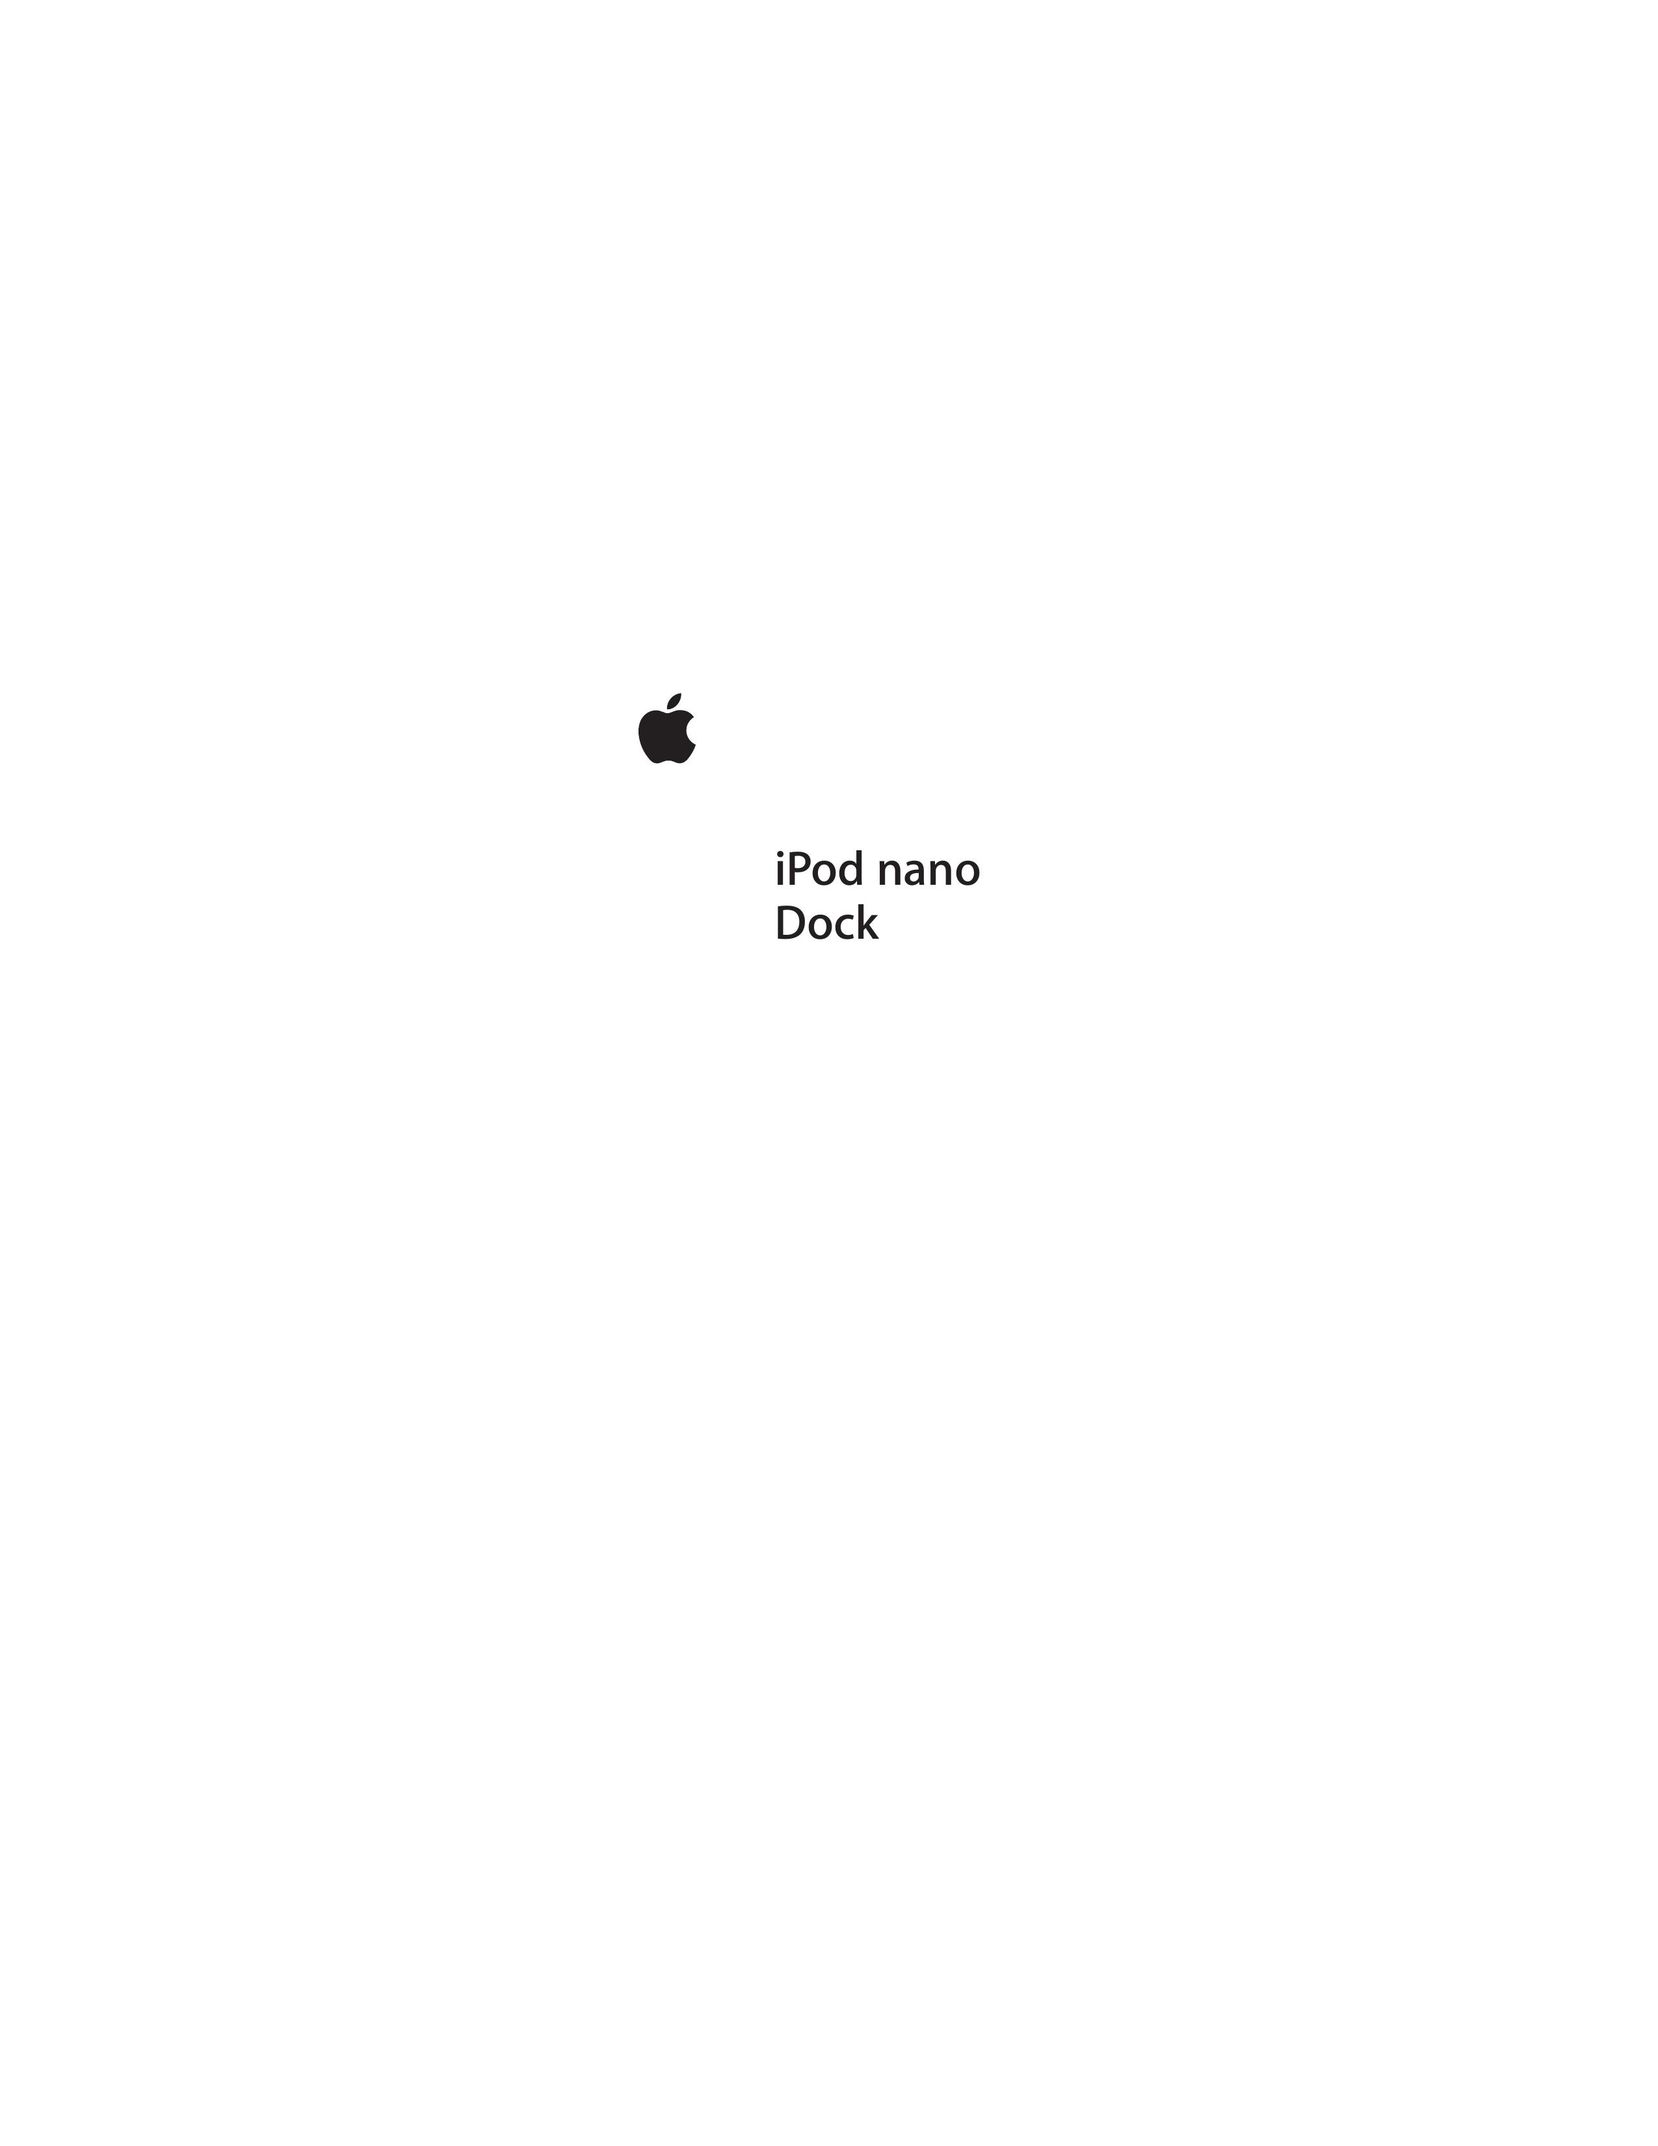 Apple iPod Nano Dock MP3 Docking Station User Manual